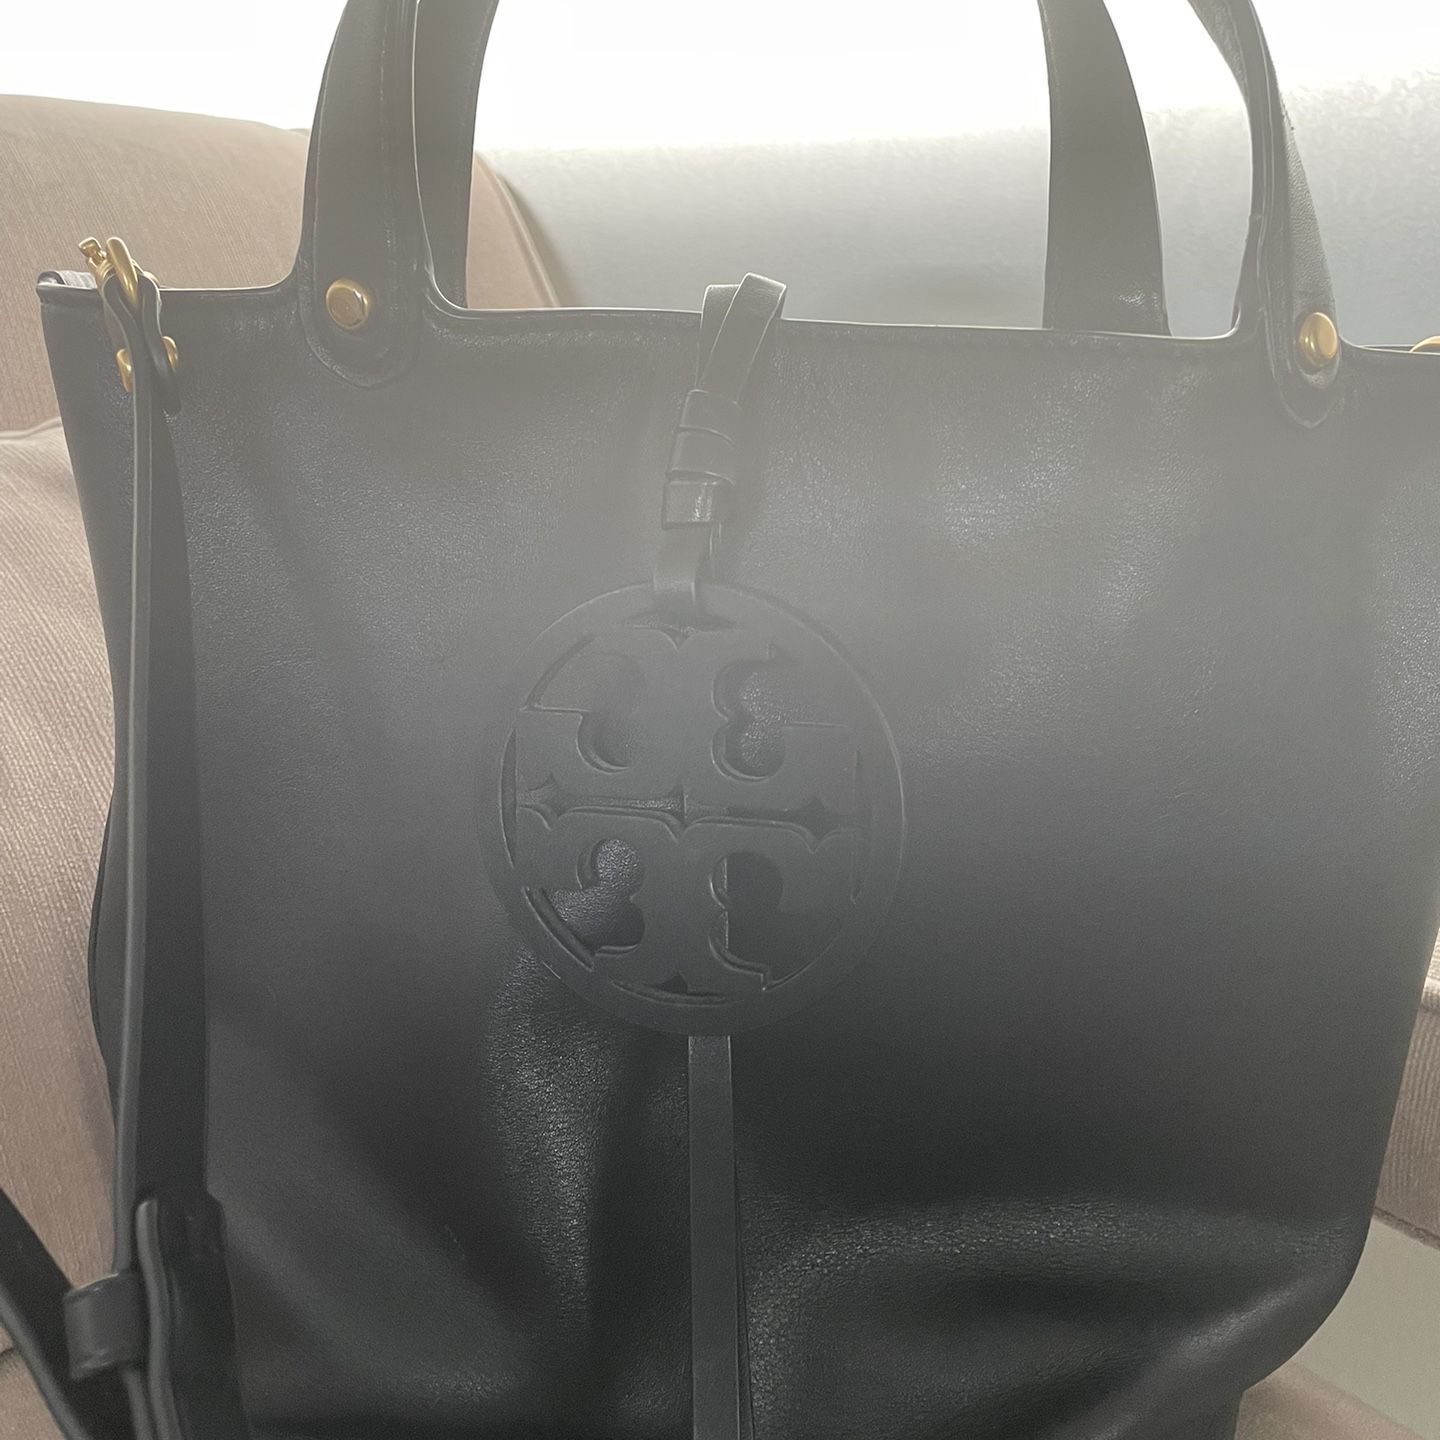 Tory Burch - Miller Leather Bucket Bag - Black for Sale in Boca Raton, FL -  OfferUp